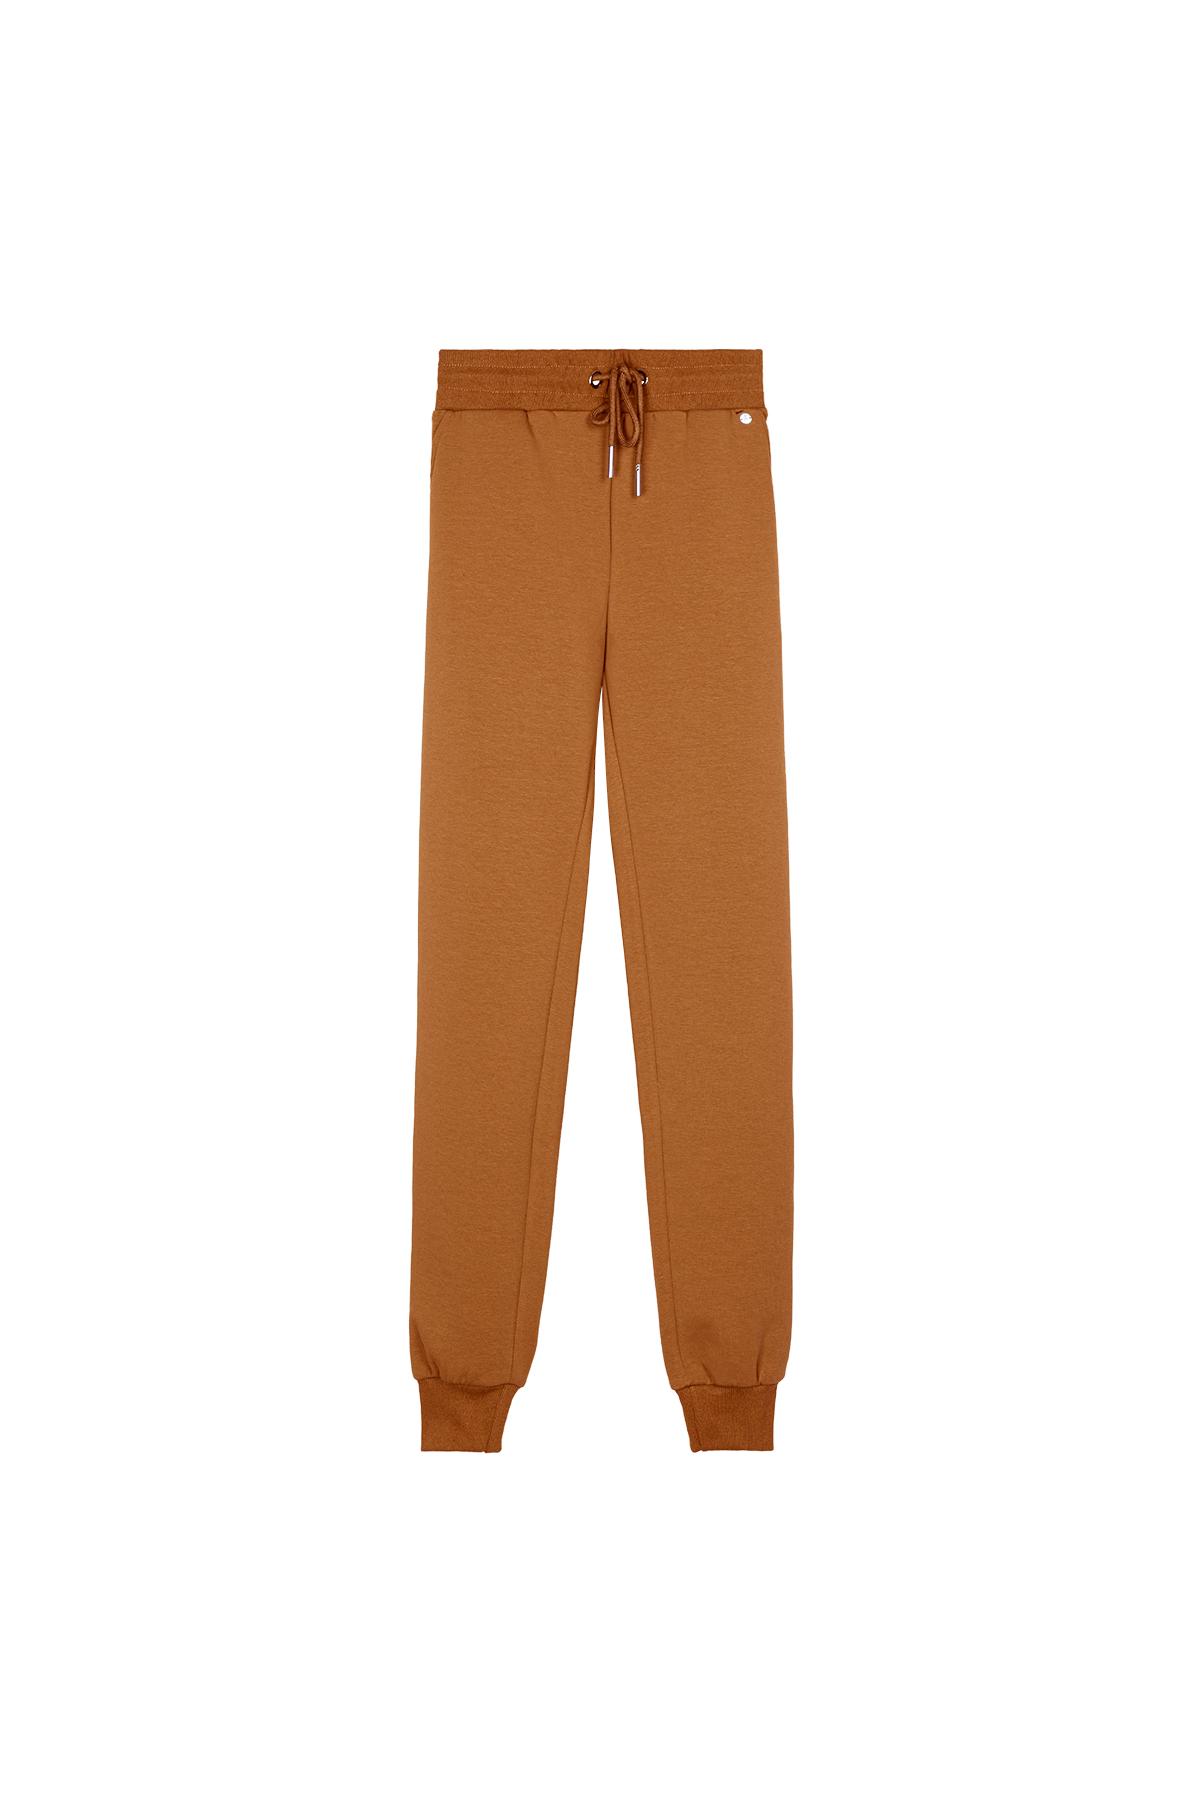 Comy pantalon loungewear Orange M h5 